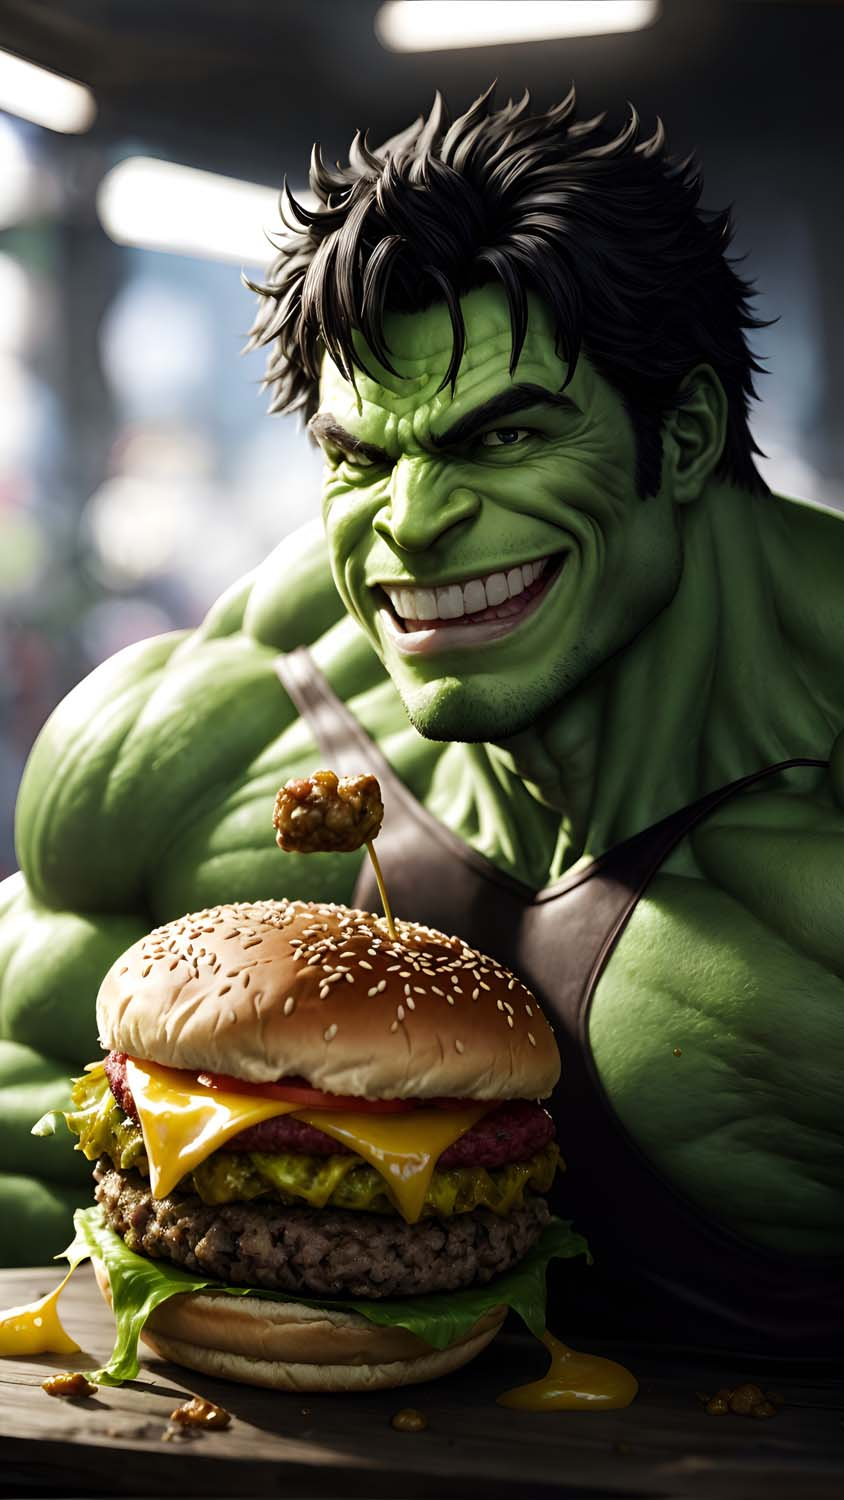 Best 500 Hamburger Pictures HD  Download Free Images on Unsplash